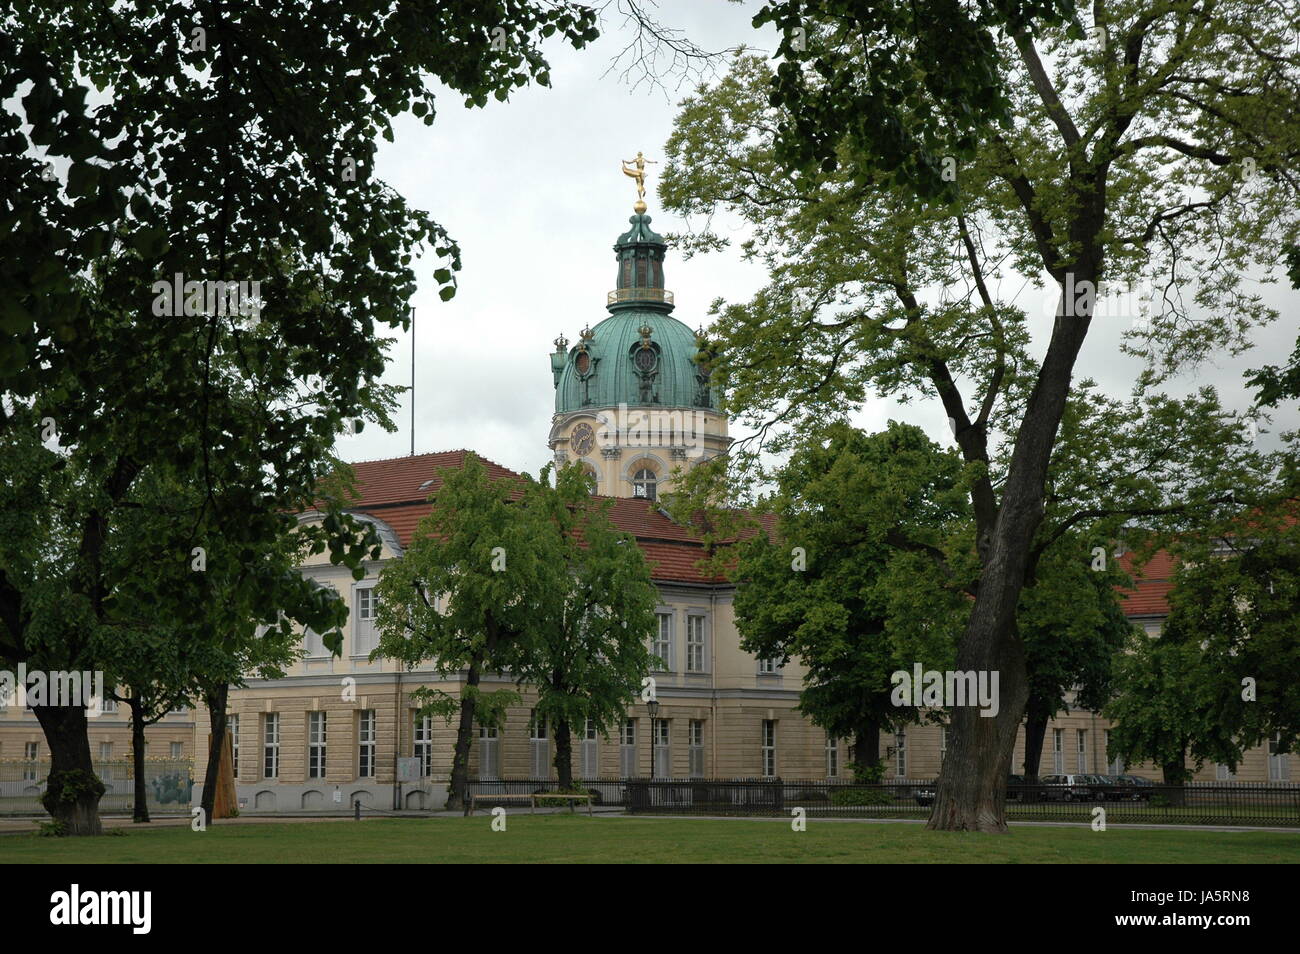 Berlin, Berlin, il firmamento cielo, nuvole, Schloss Charlottenburg preuische Foto Stock